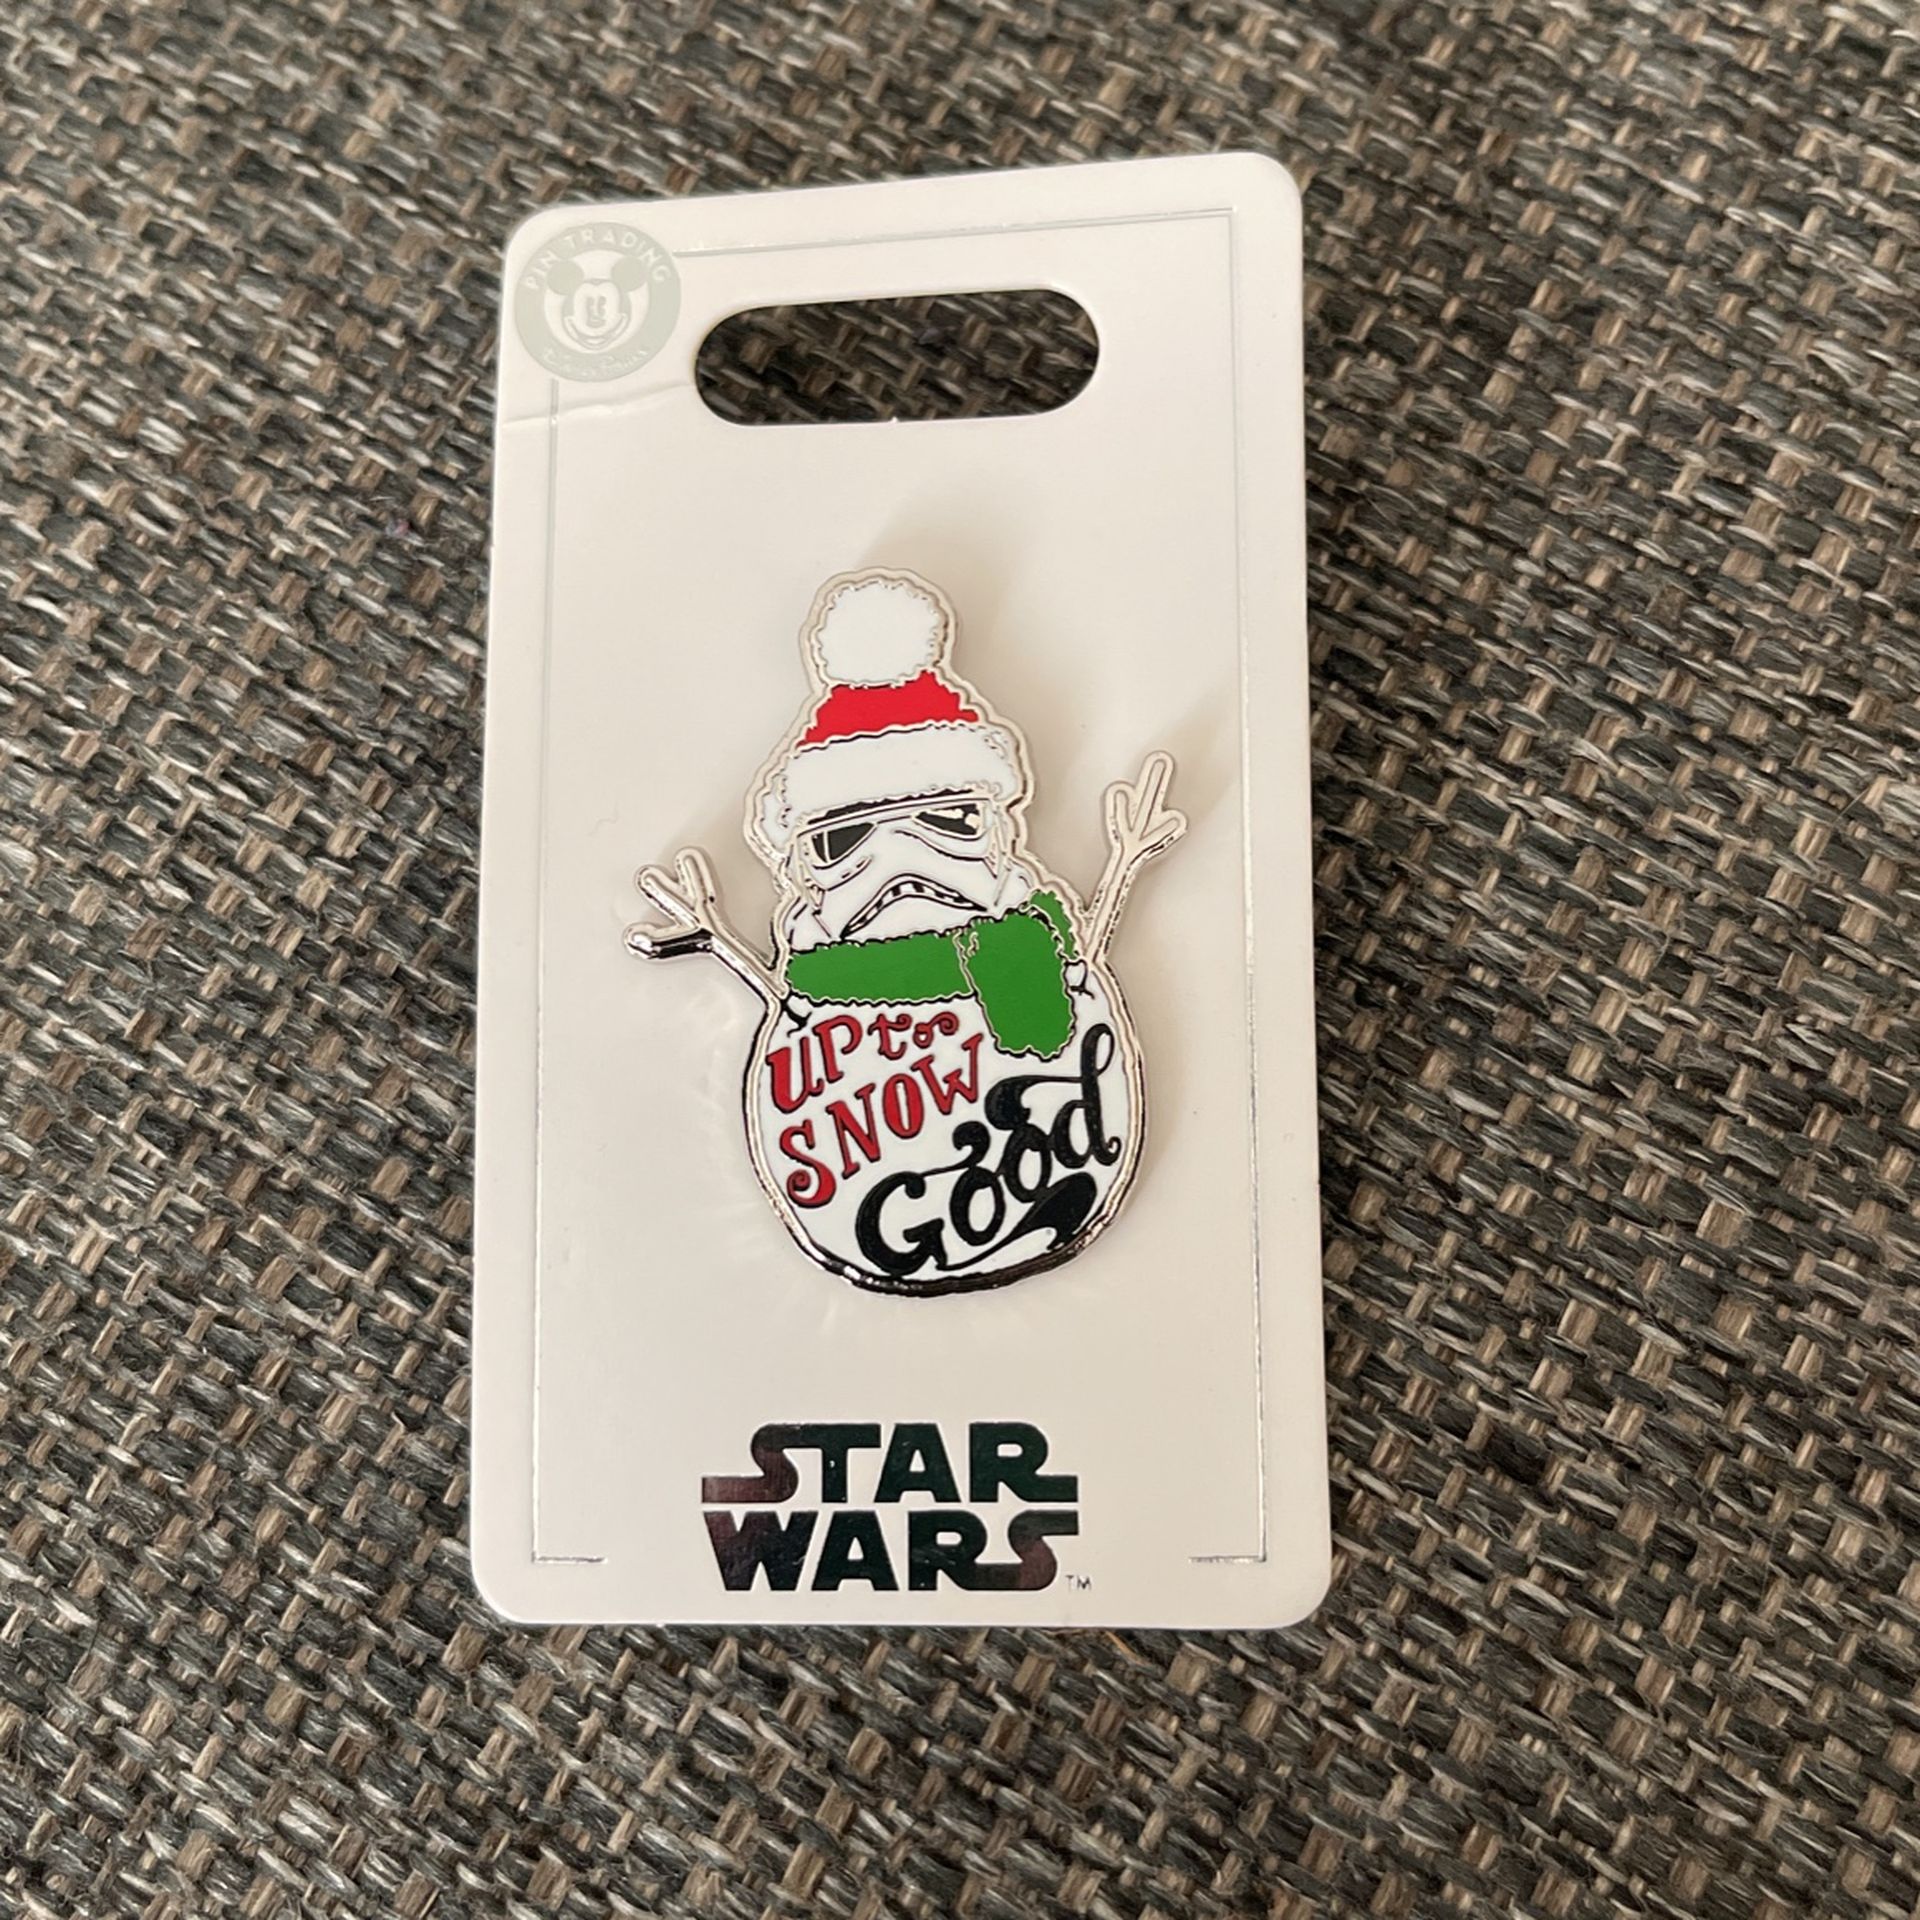 Disney Storm Trooper Holiday Pin